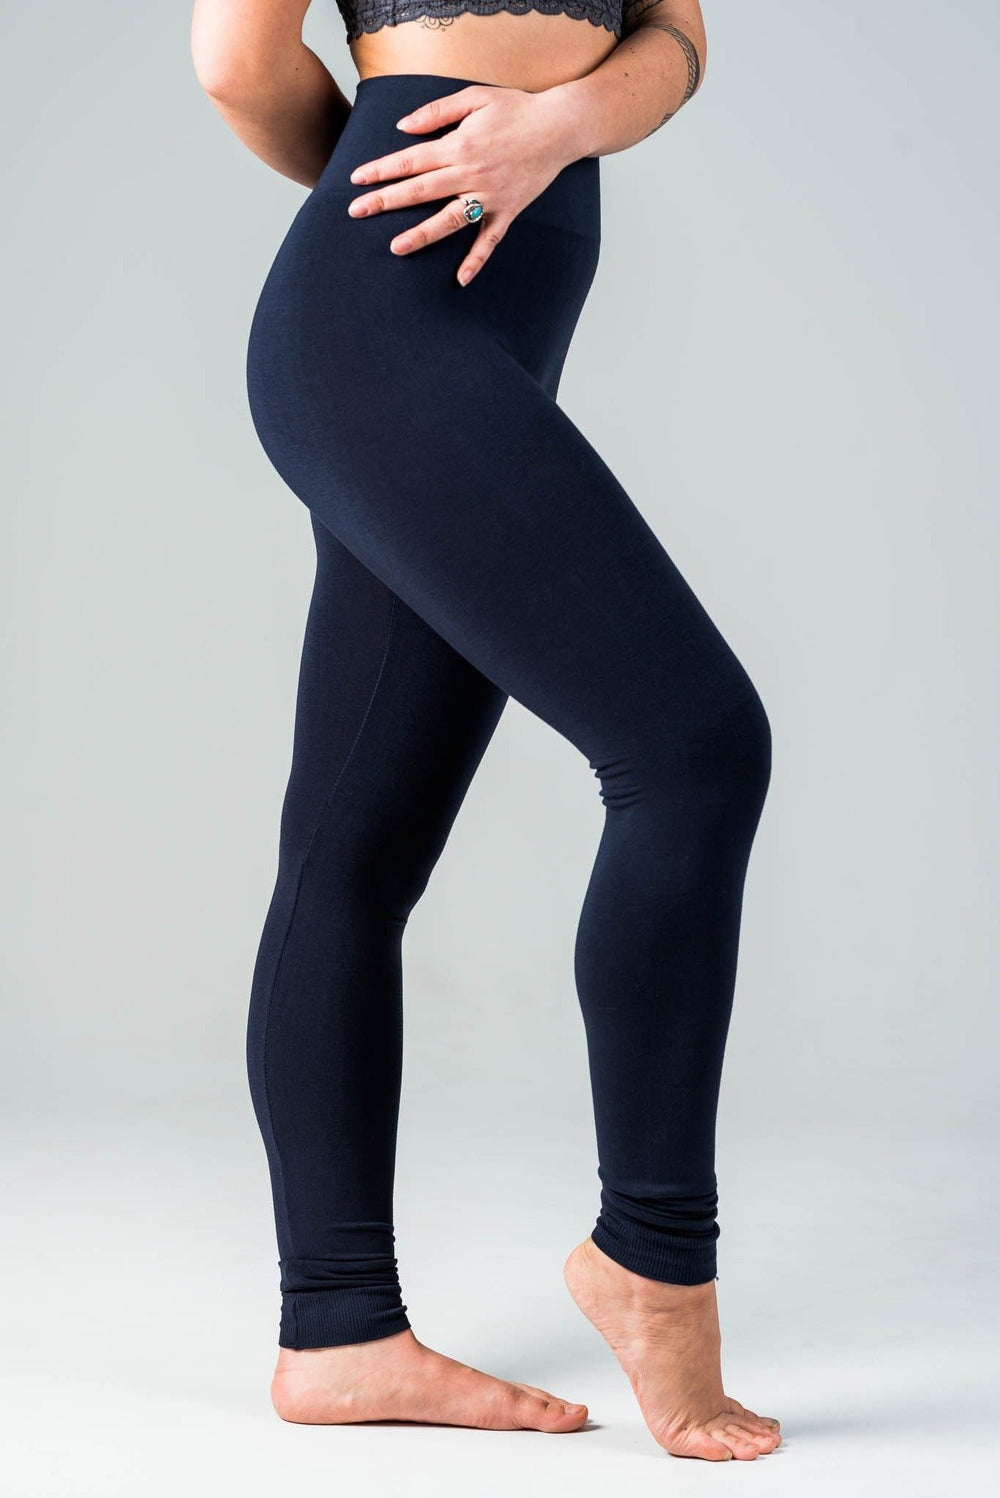 Alvivi Women Black See-through Mesh Patchwork Leggings Yoga Pants S-XXL 